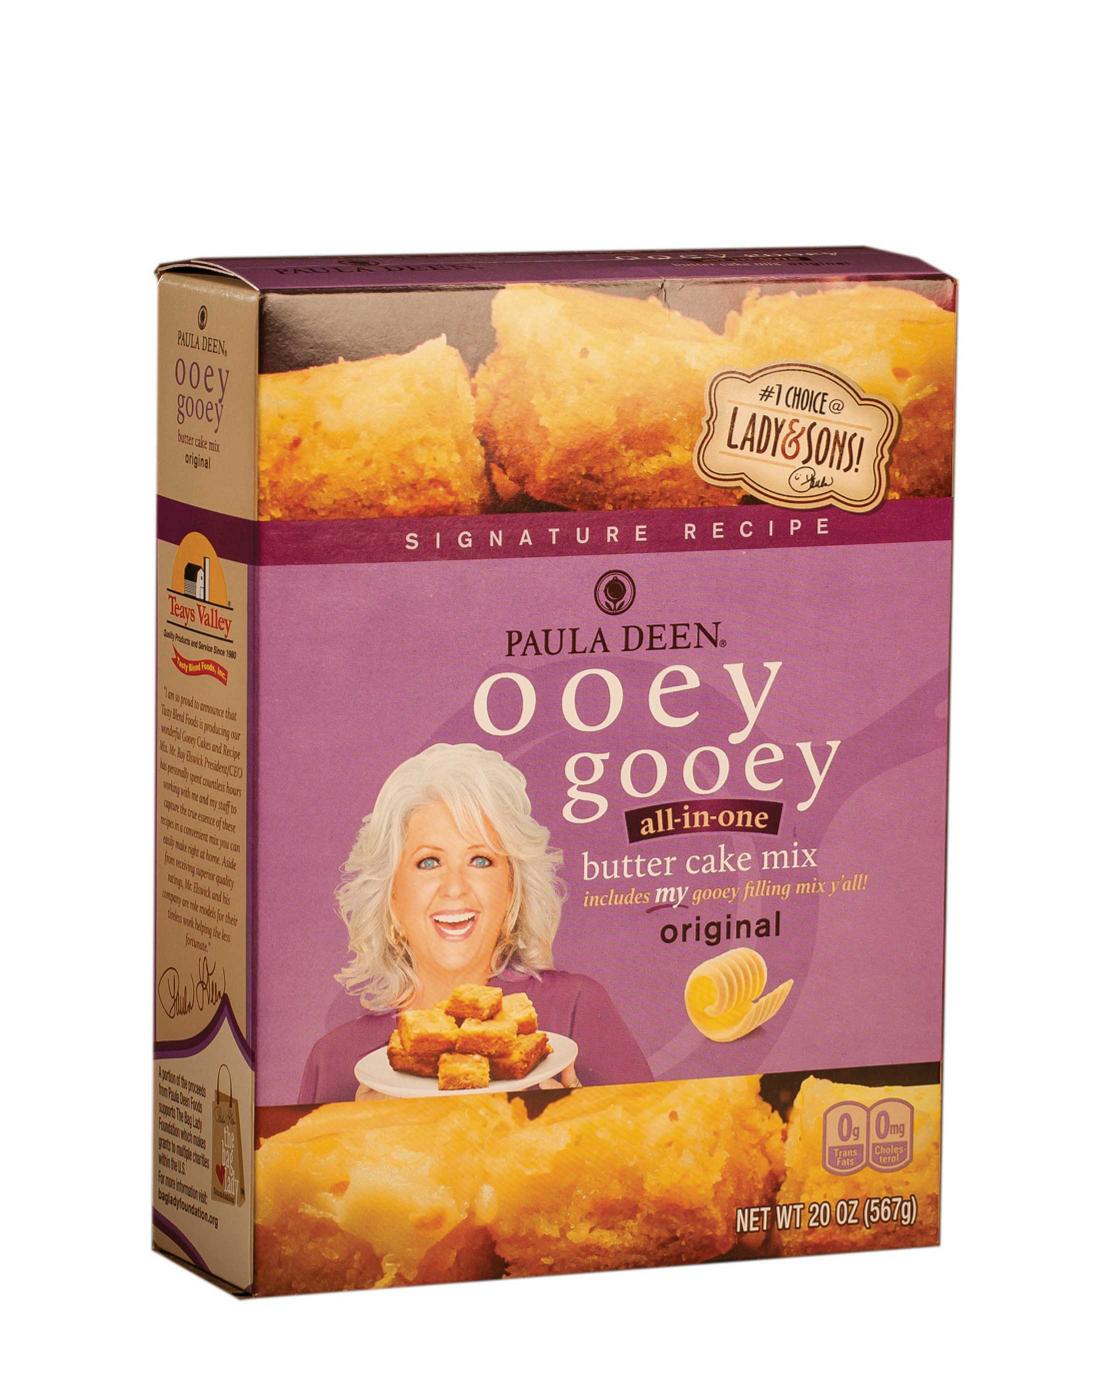 Paula Deen Original Ooey Gooey Butter Cake Mix; image 1 of 2